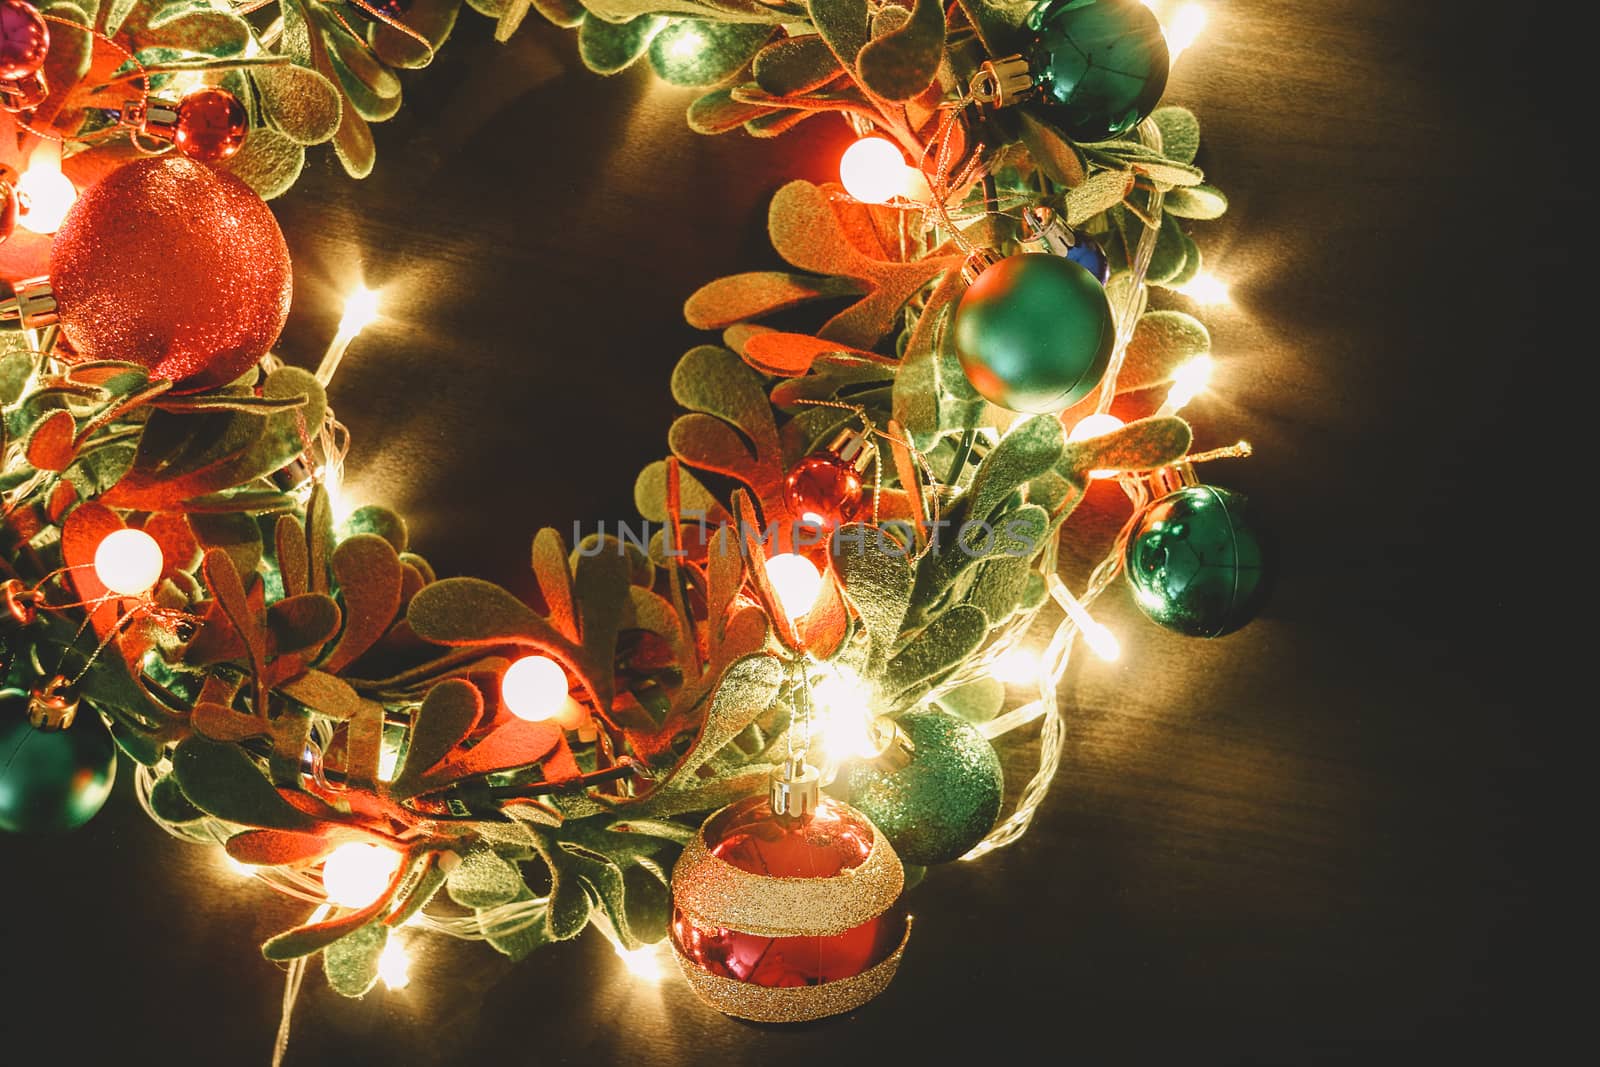 Greeting Season concept.Christmas wreath with decorative light on dark wood background